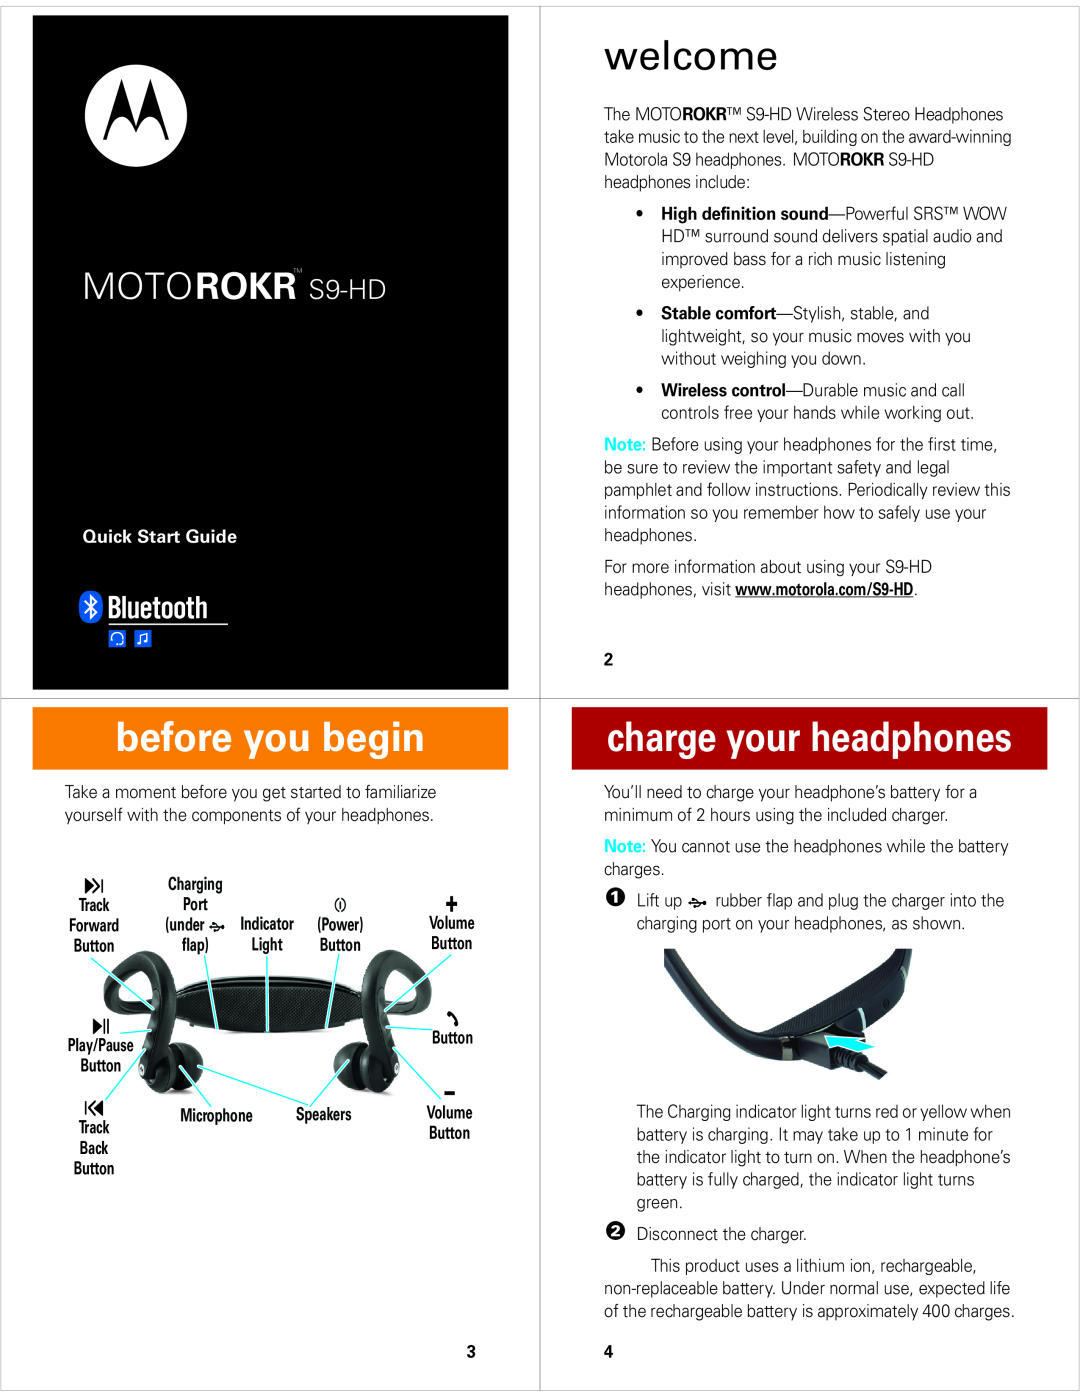 Motorola quick start welcome, charge your headphones, Quick Start Guide, MOTOROKR S9-HD, before you begin 